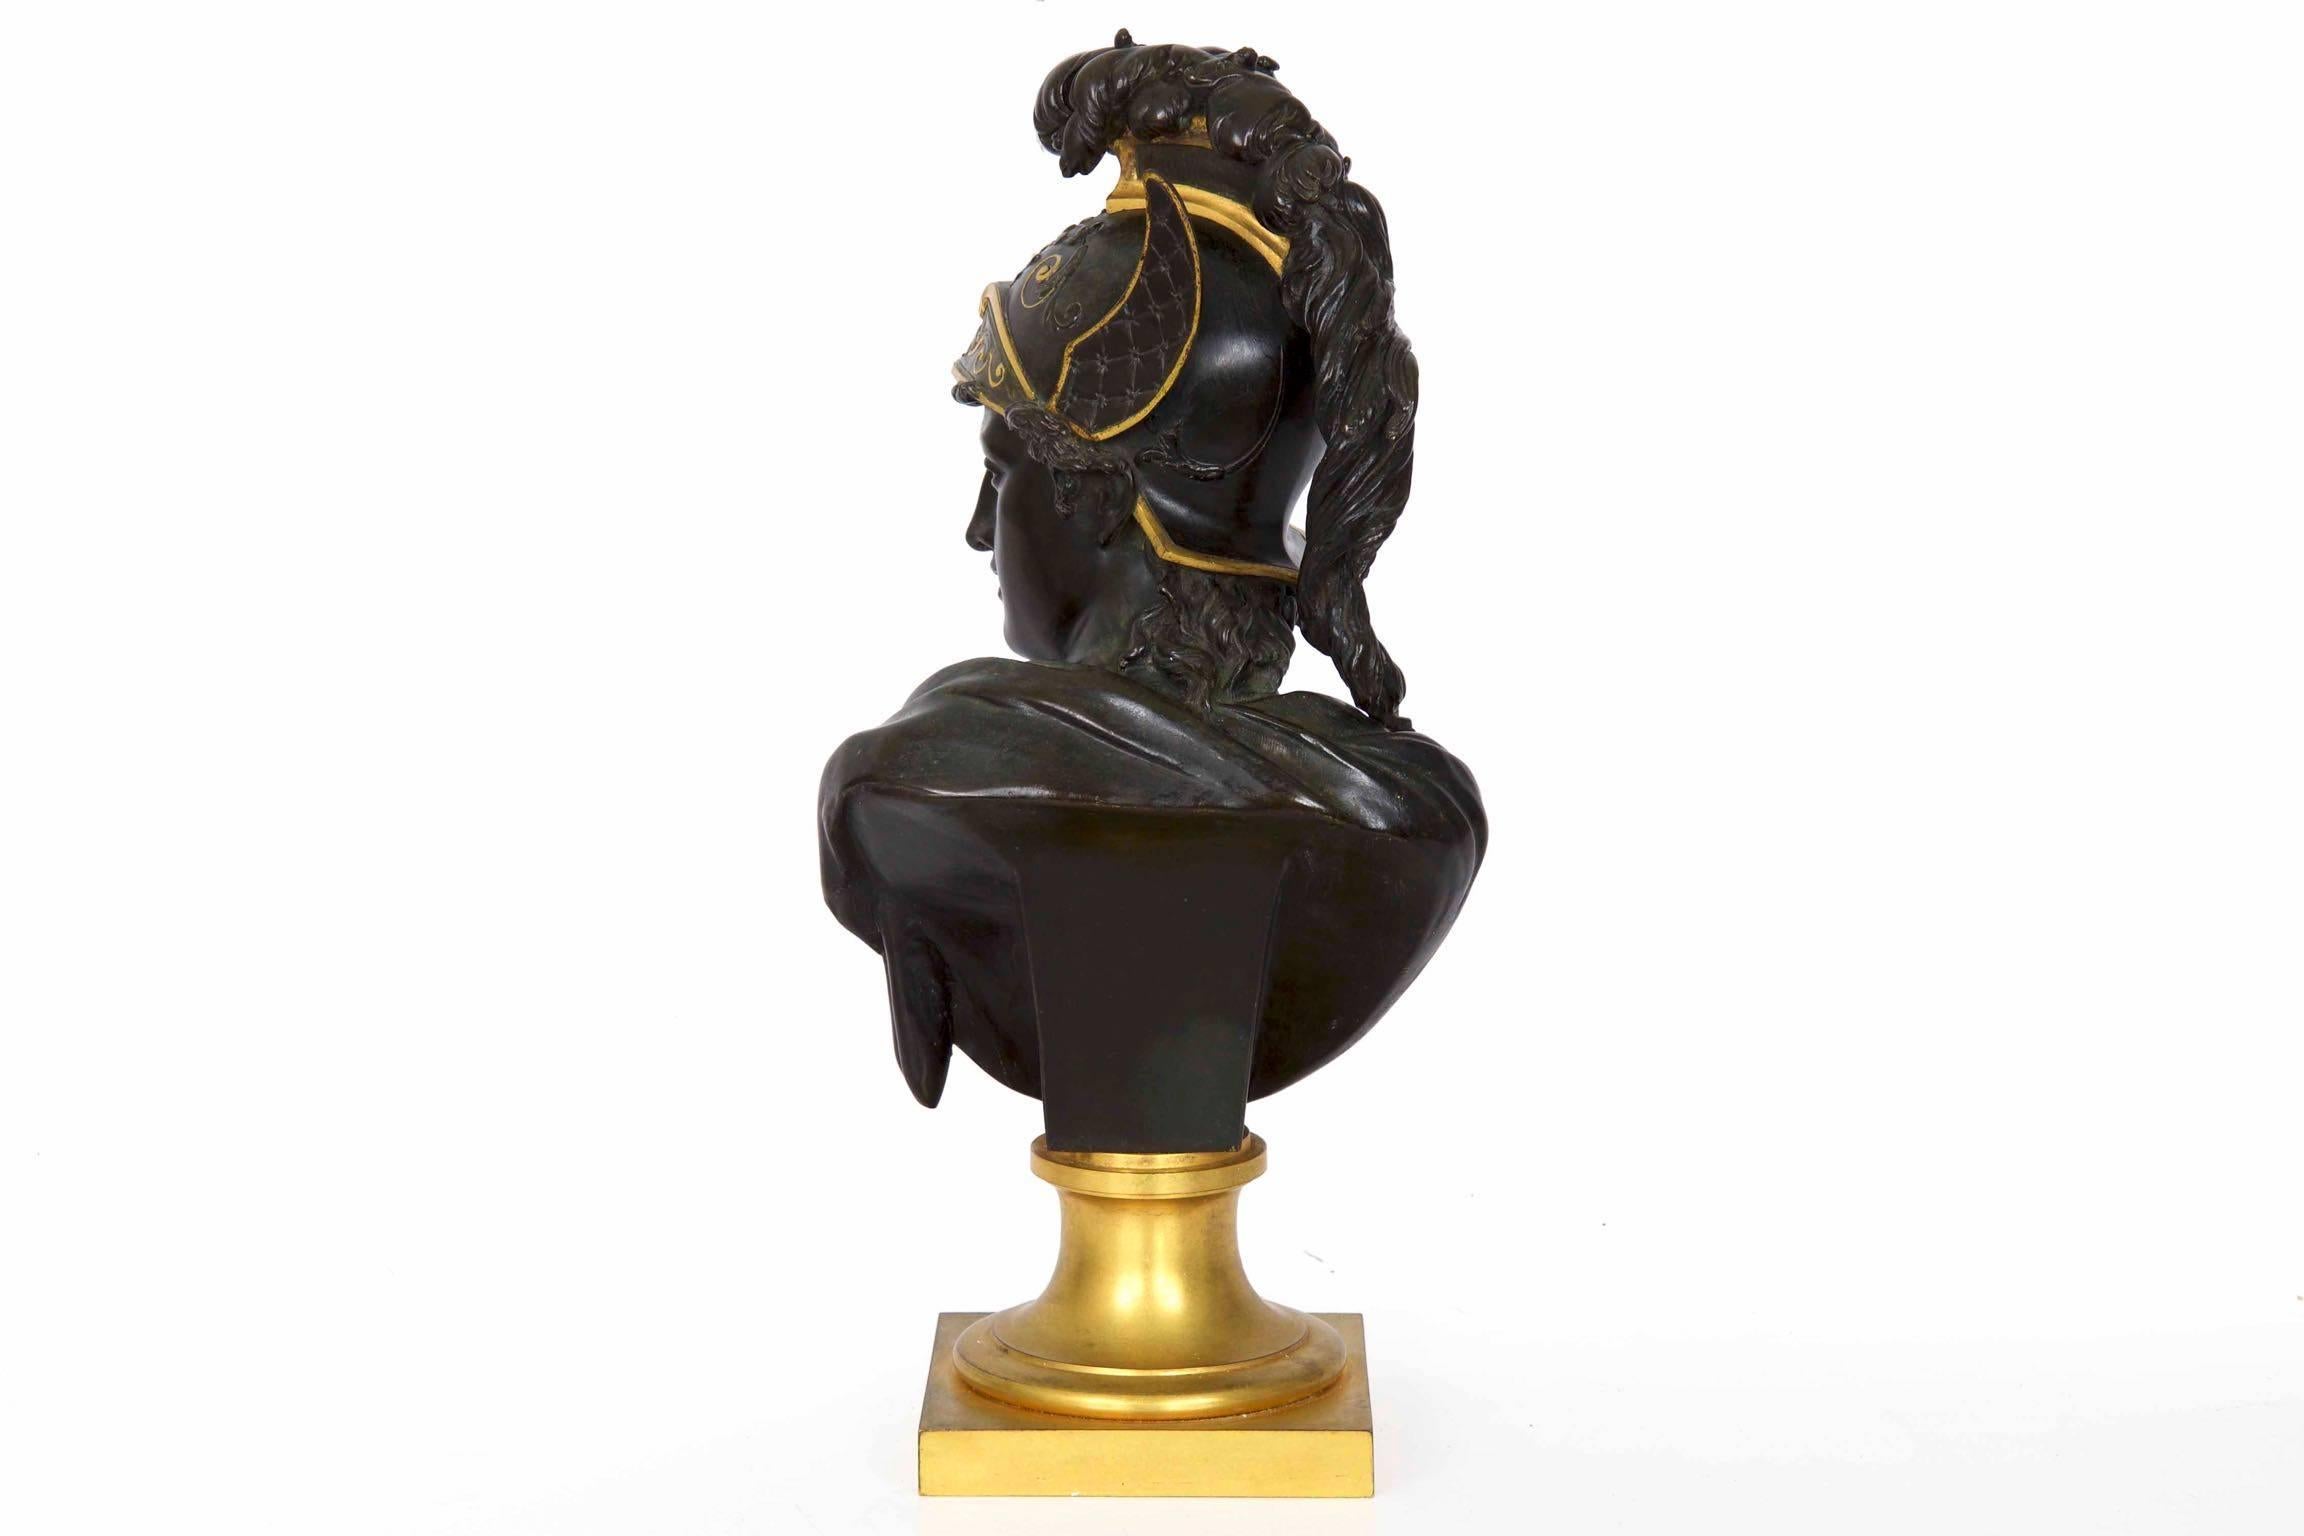 European 19th Century Grand Tour Bust Bronze Sculpture of Mercury or Hermes